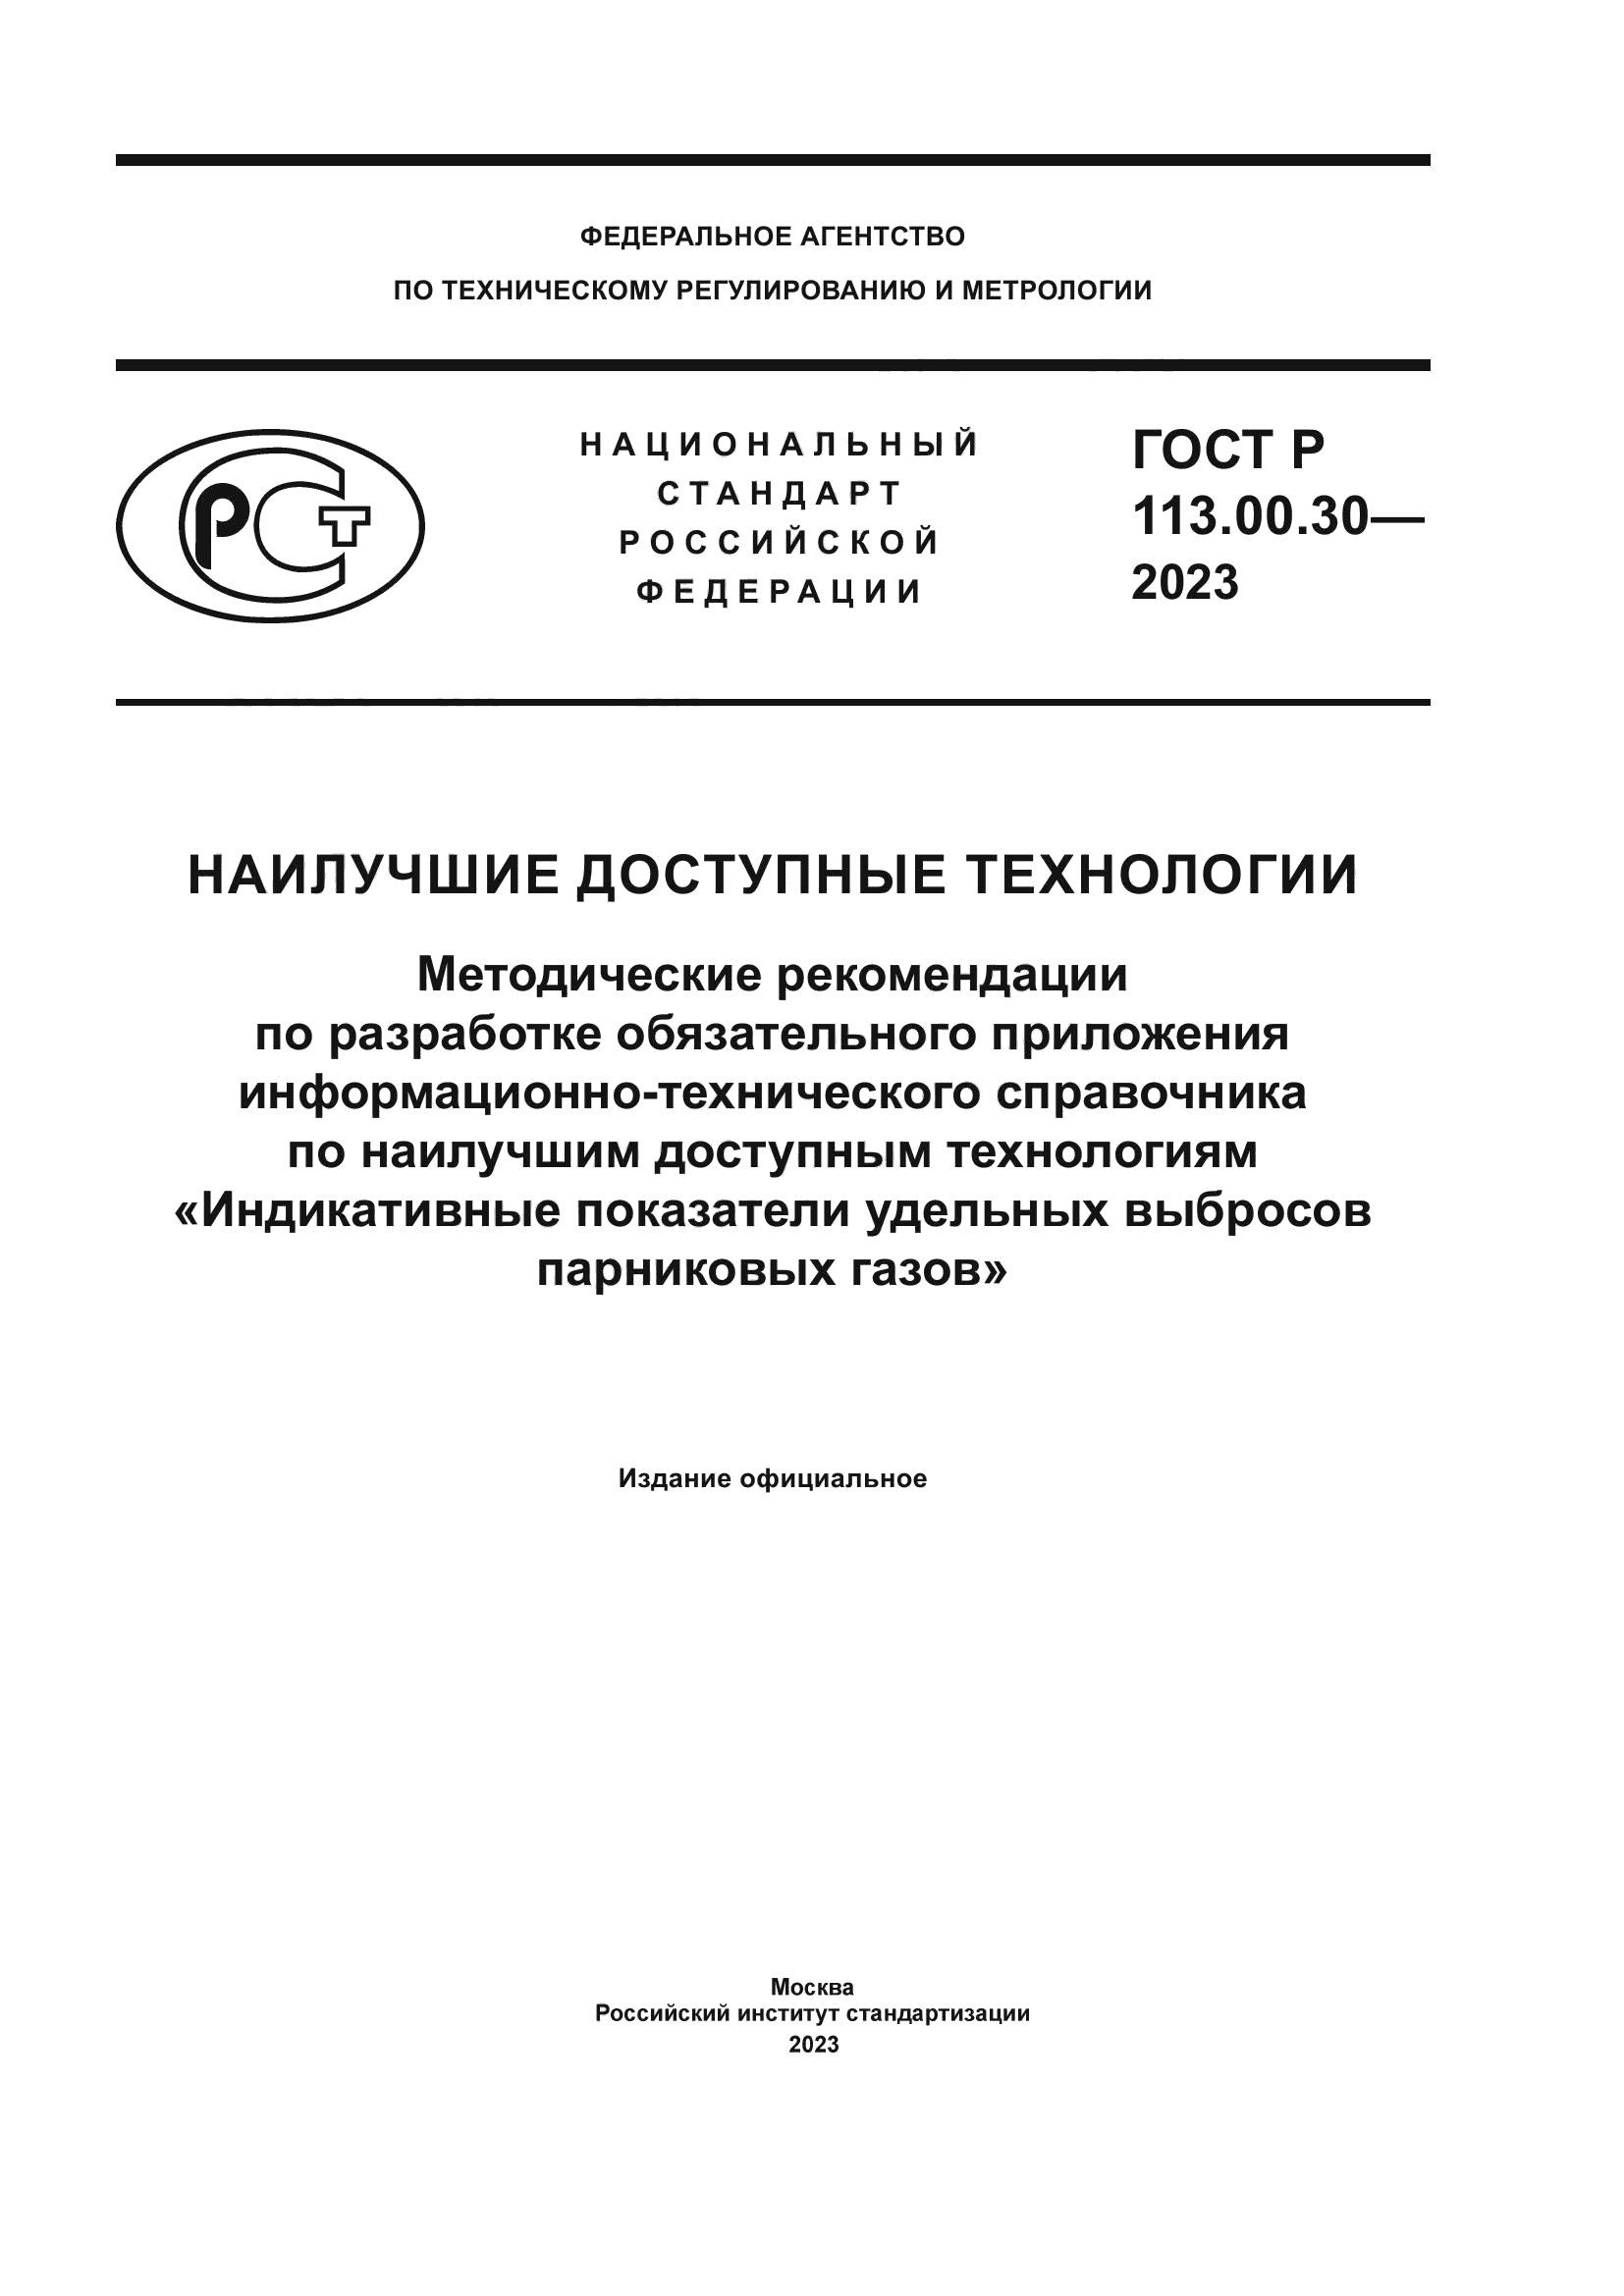 ГОСТ Р 113.00.30-2023